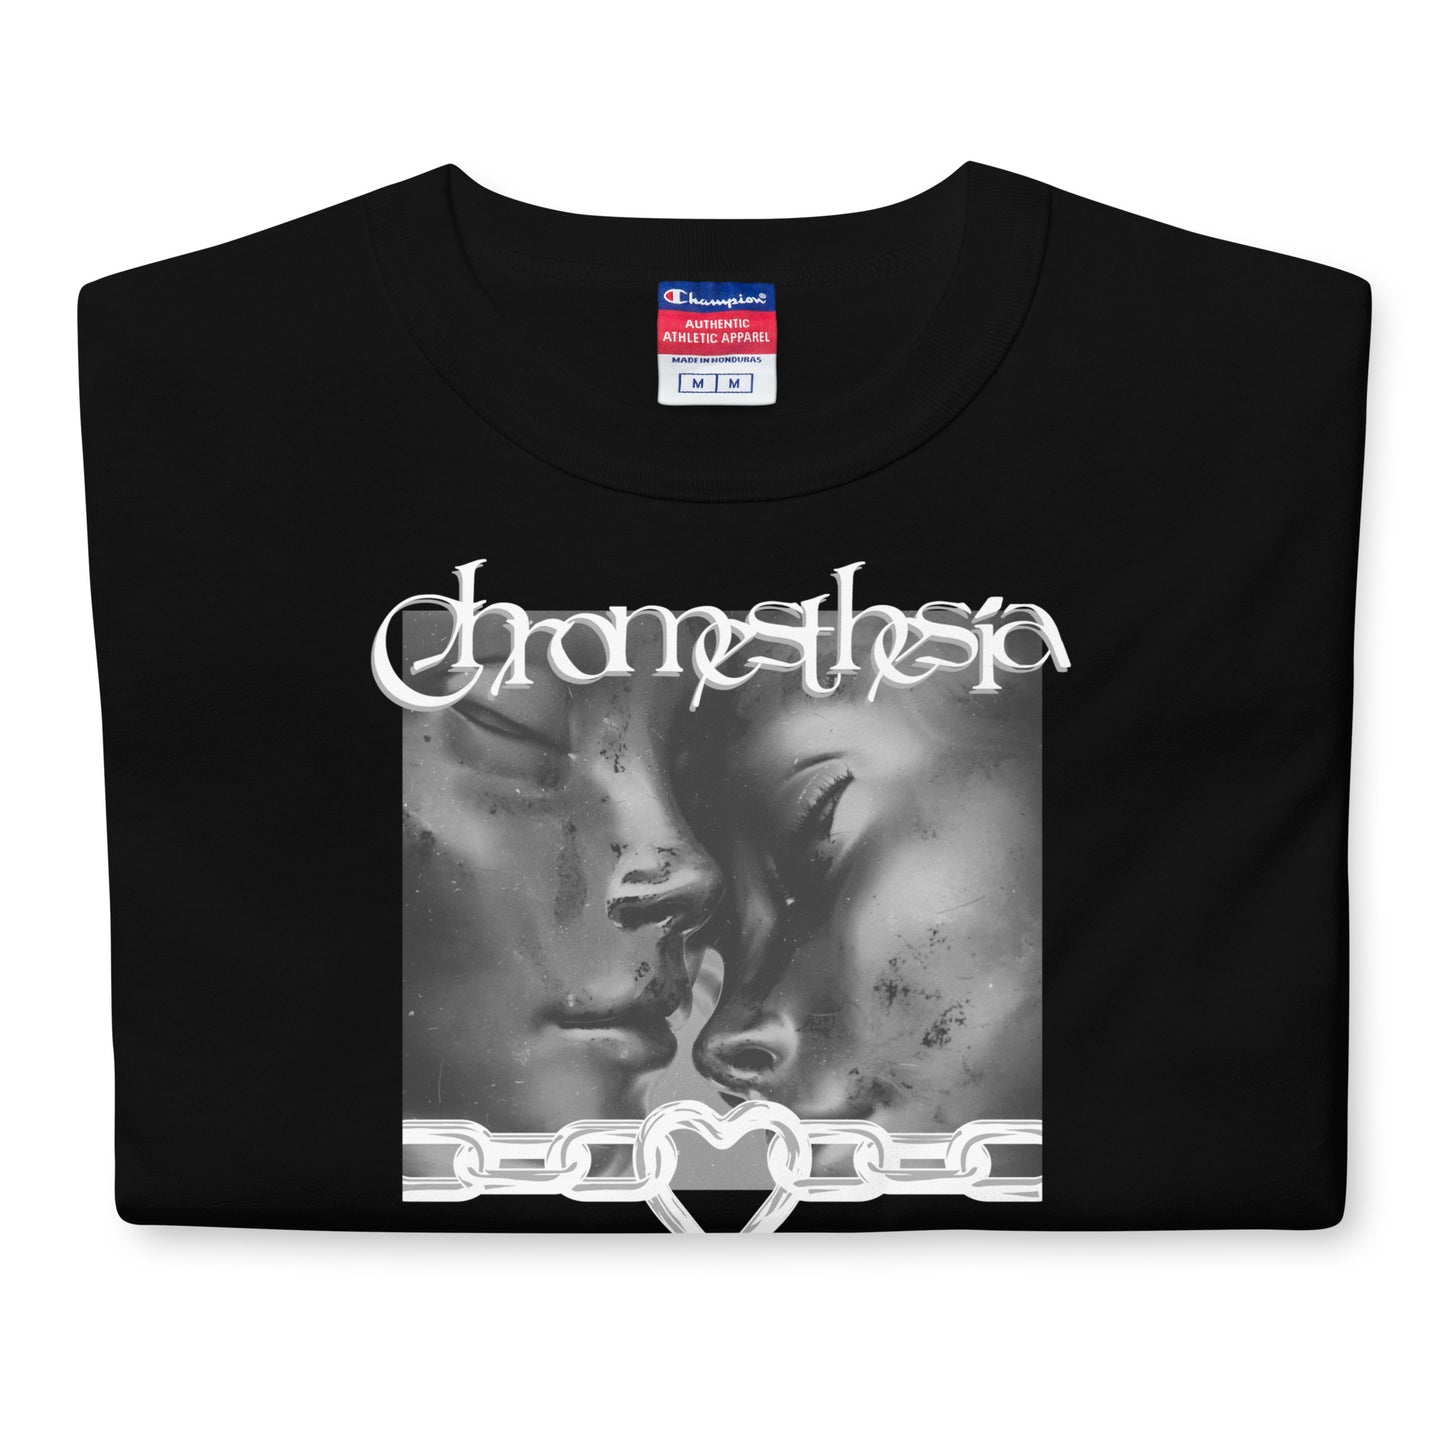 Chromesthesia T-shirt